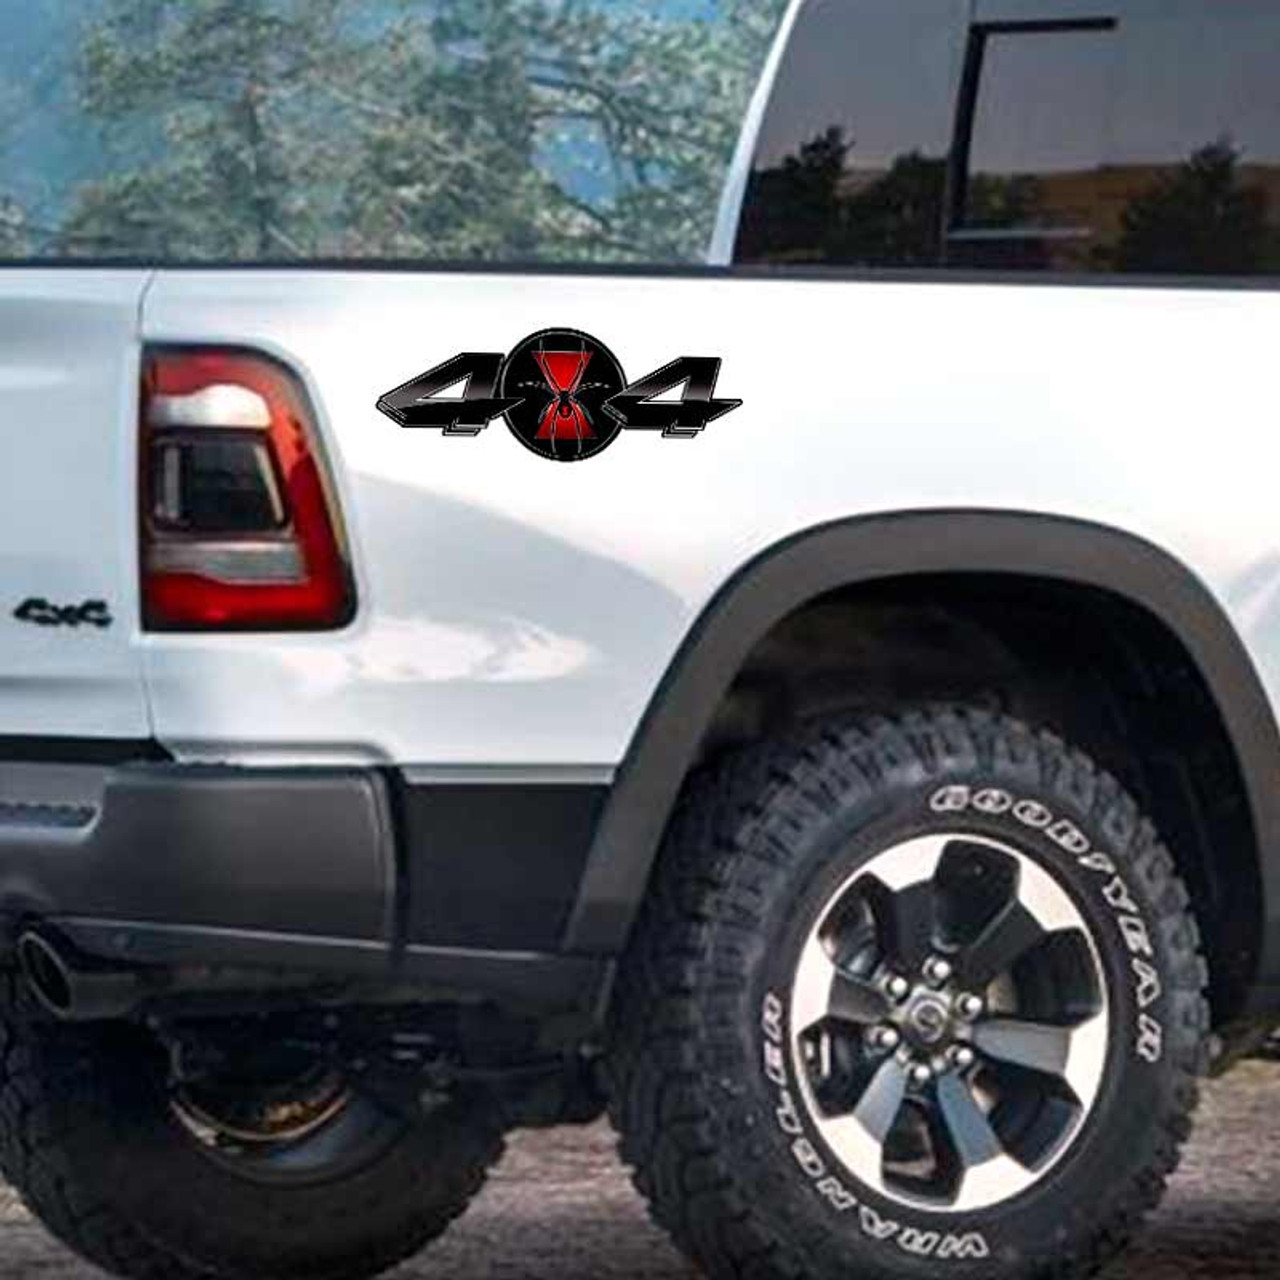 Black Widow Spider Dodge Ram Dakota 4x4 Truck Decal Set